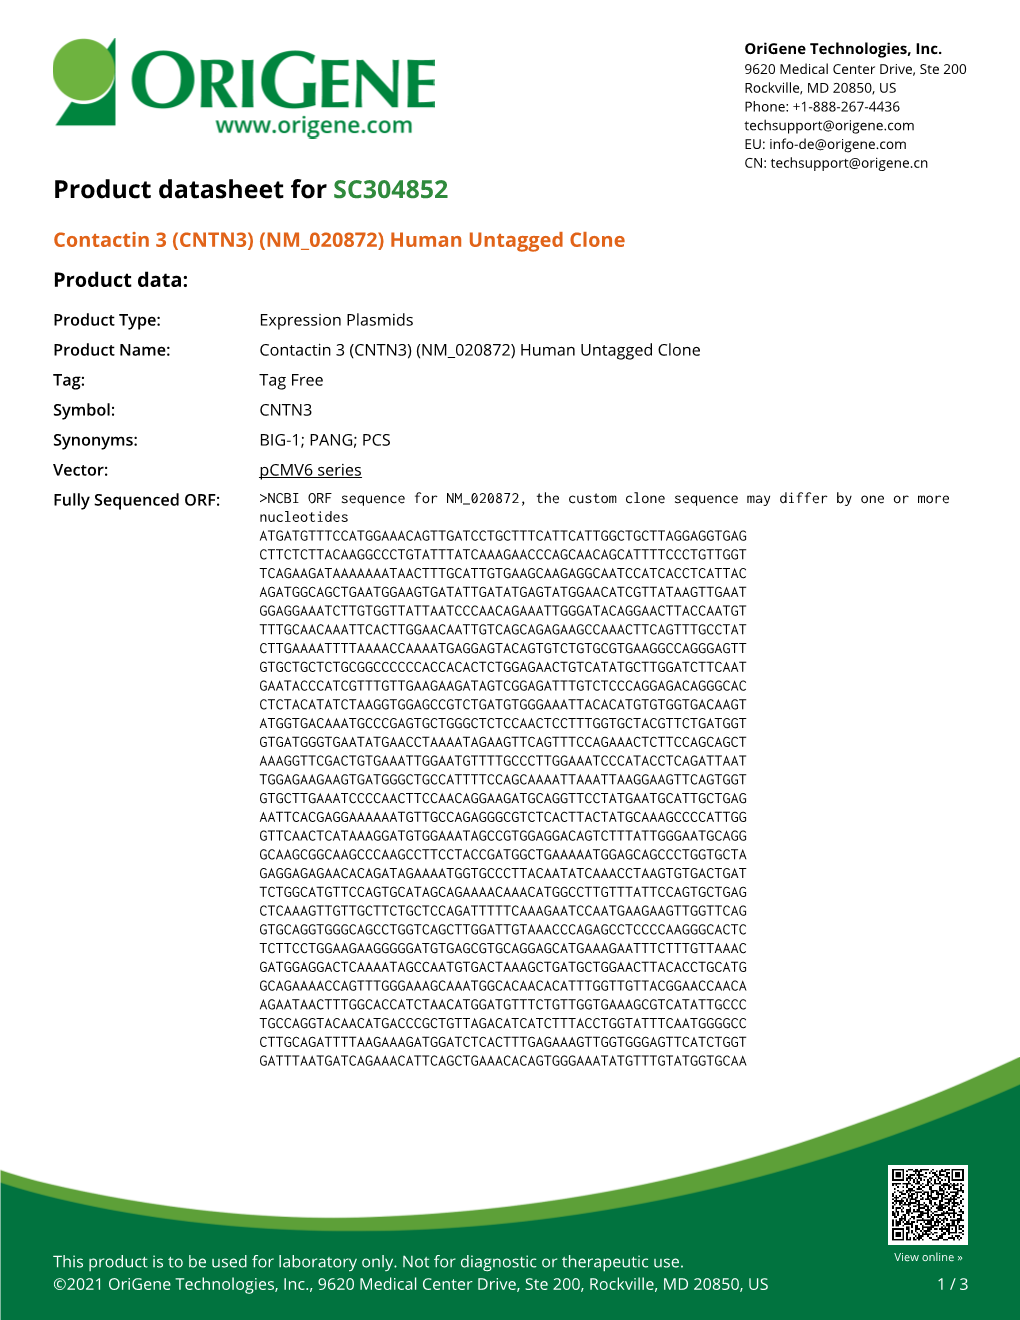 Contactin 3 (CNTN3) (NM 020872) Human Untagged Clone Product Data